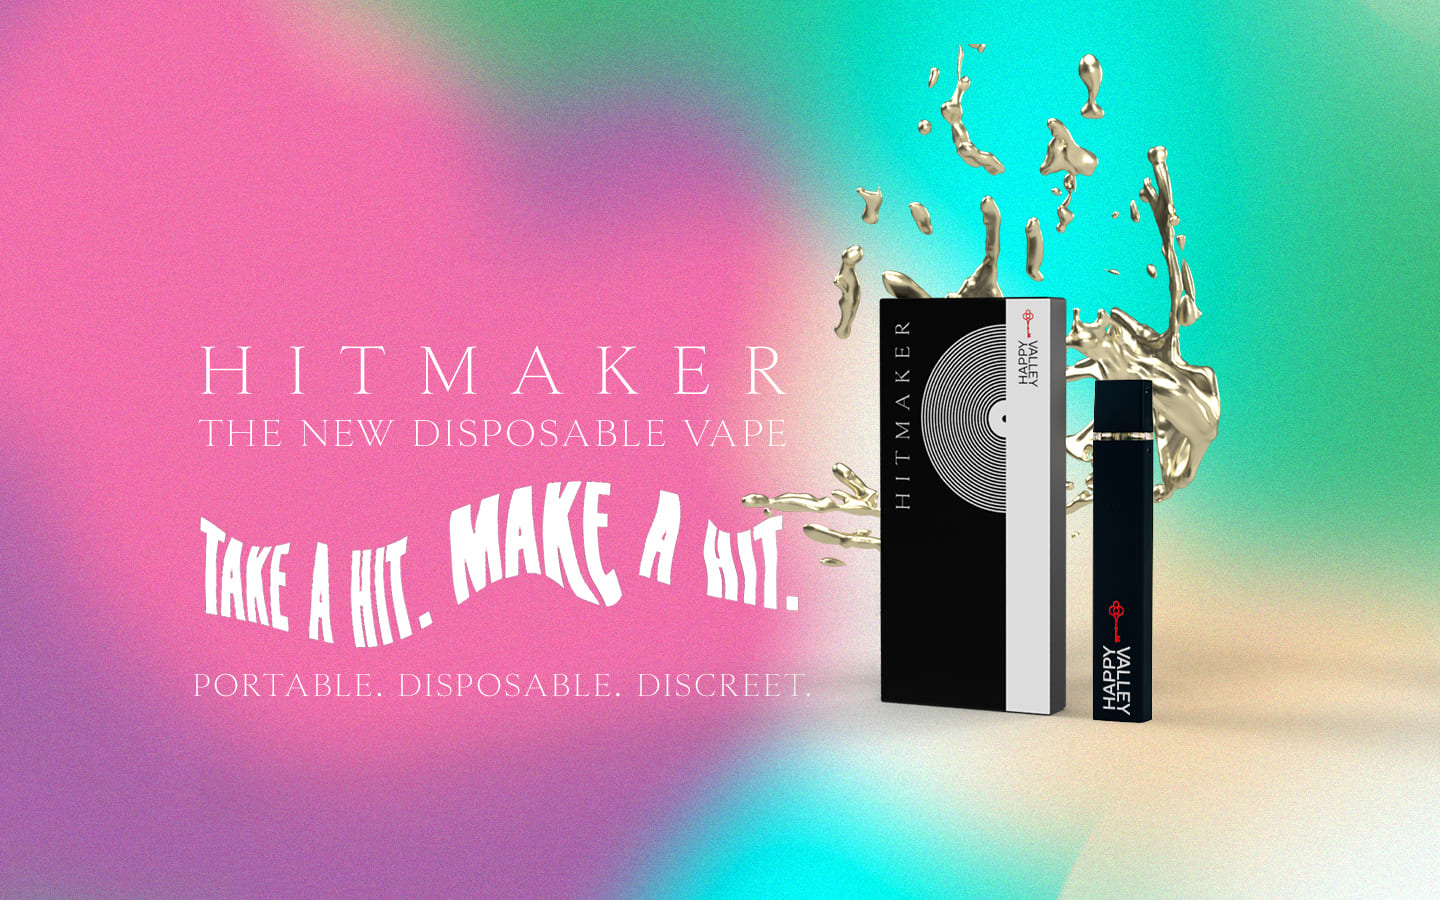 Hitmaker, the new disposable vape. Take a hit. Make a hit. Portable, disposable, discrete.